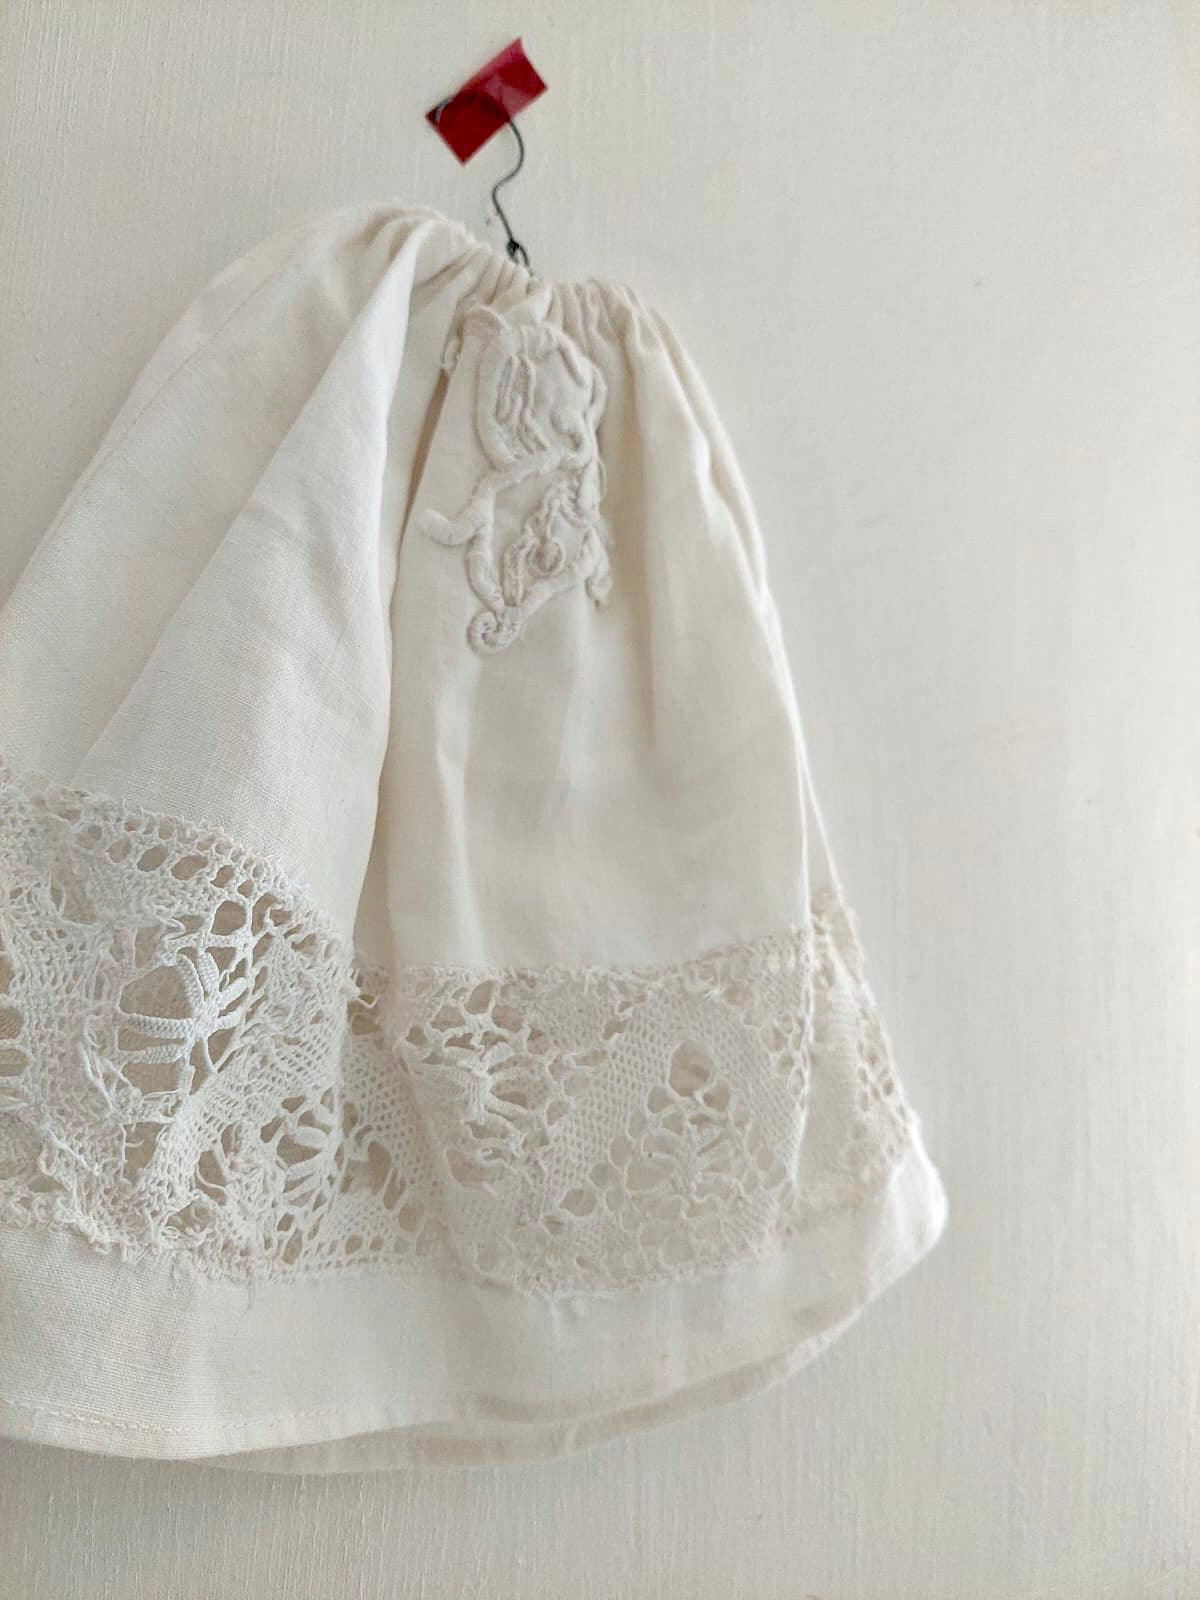 (Copy) Old linen doll petticoat